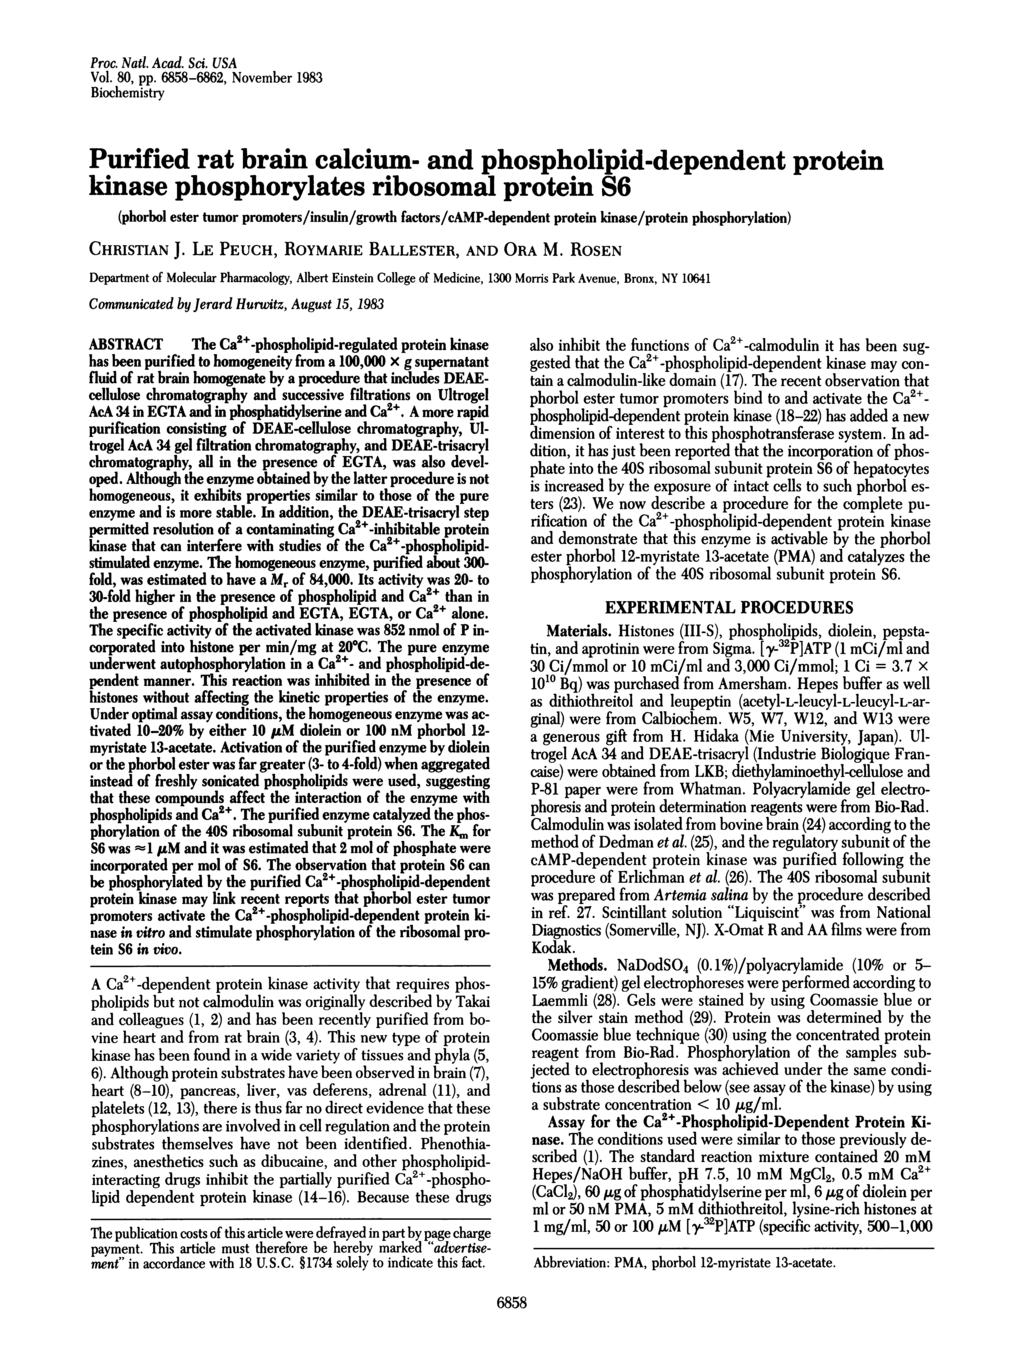 Proc. Nati. Acad. Sci. USA Vol. 80, pp.